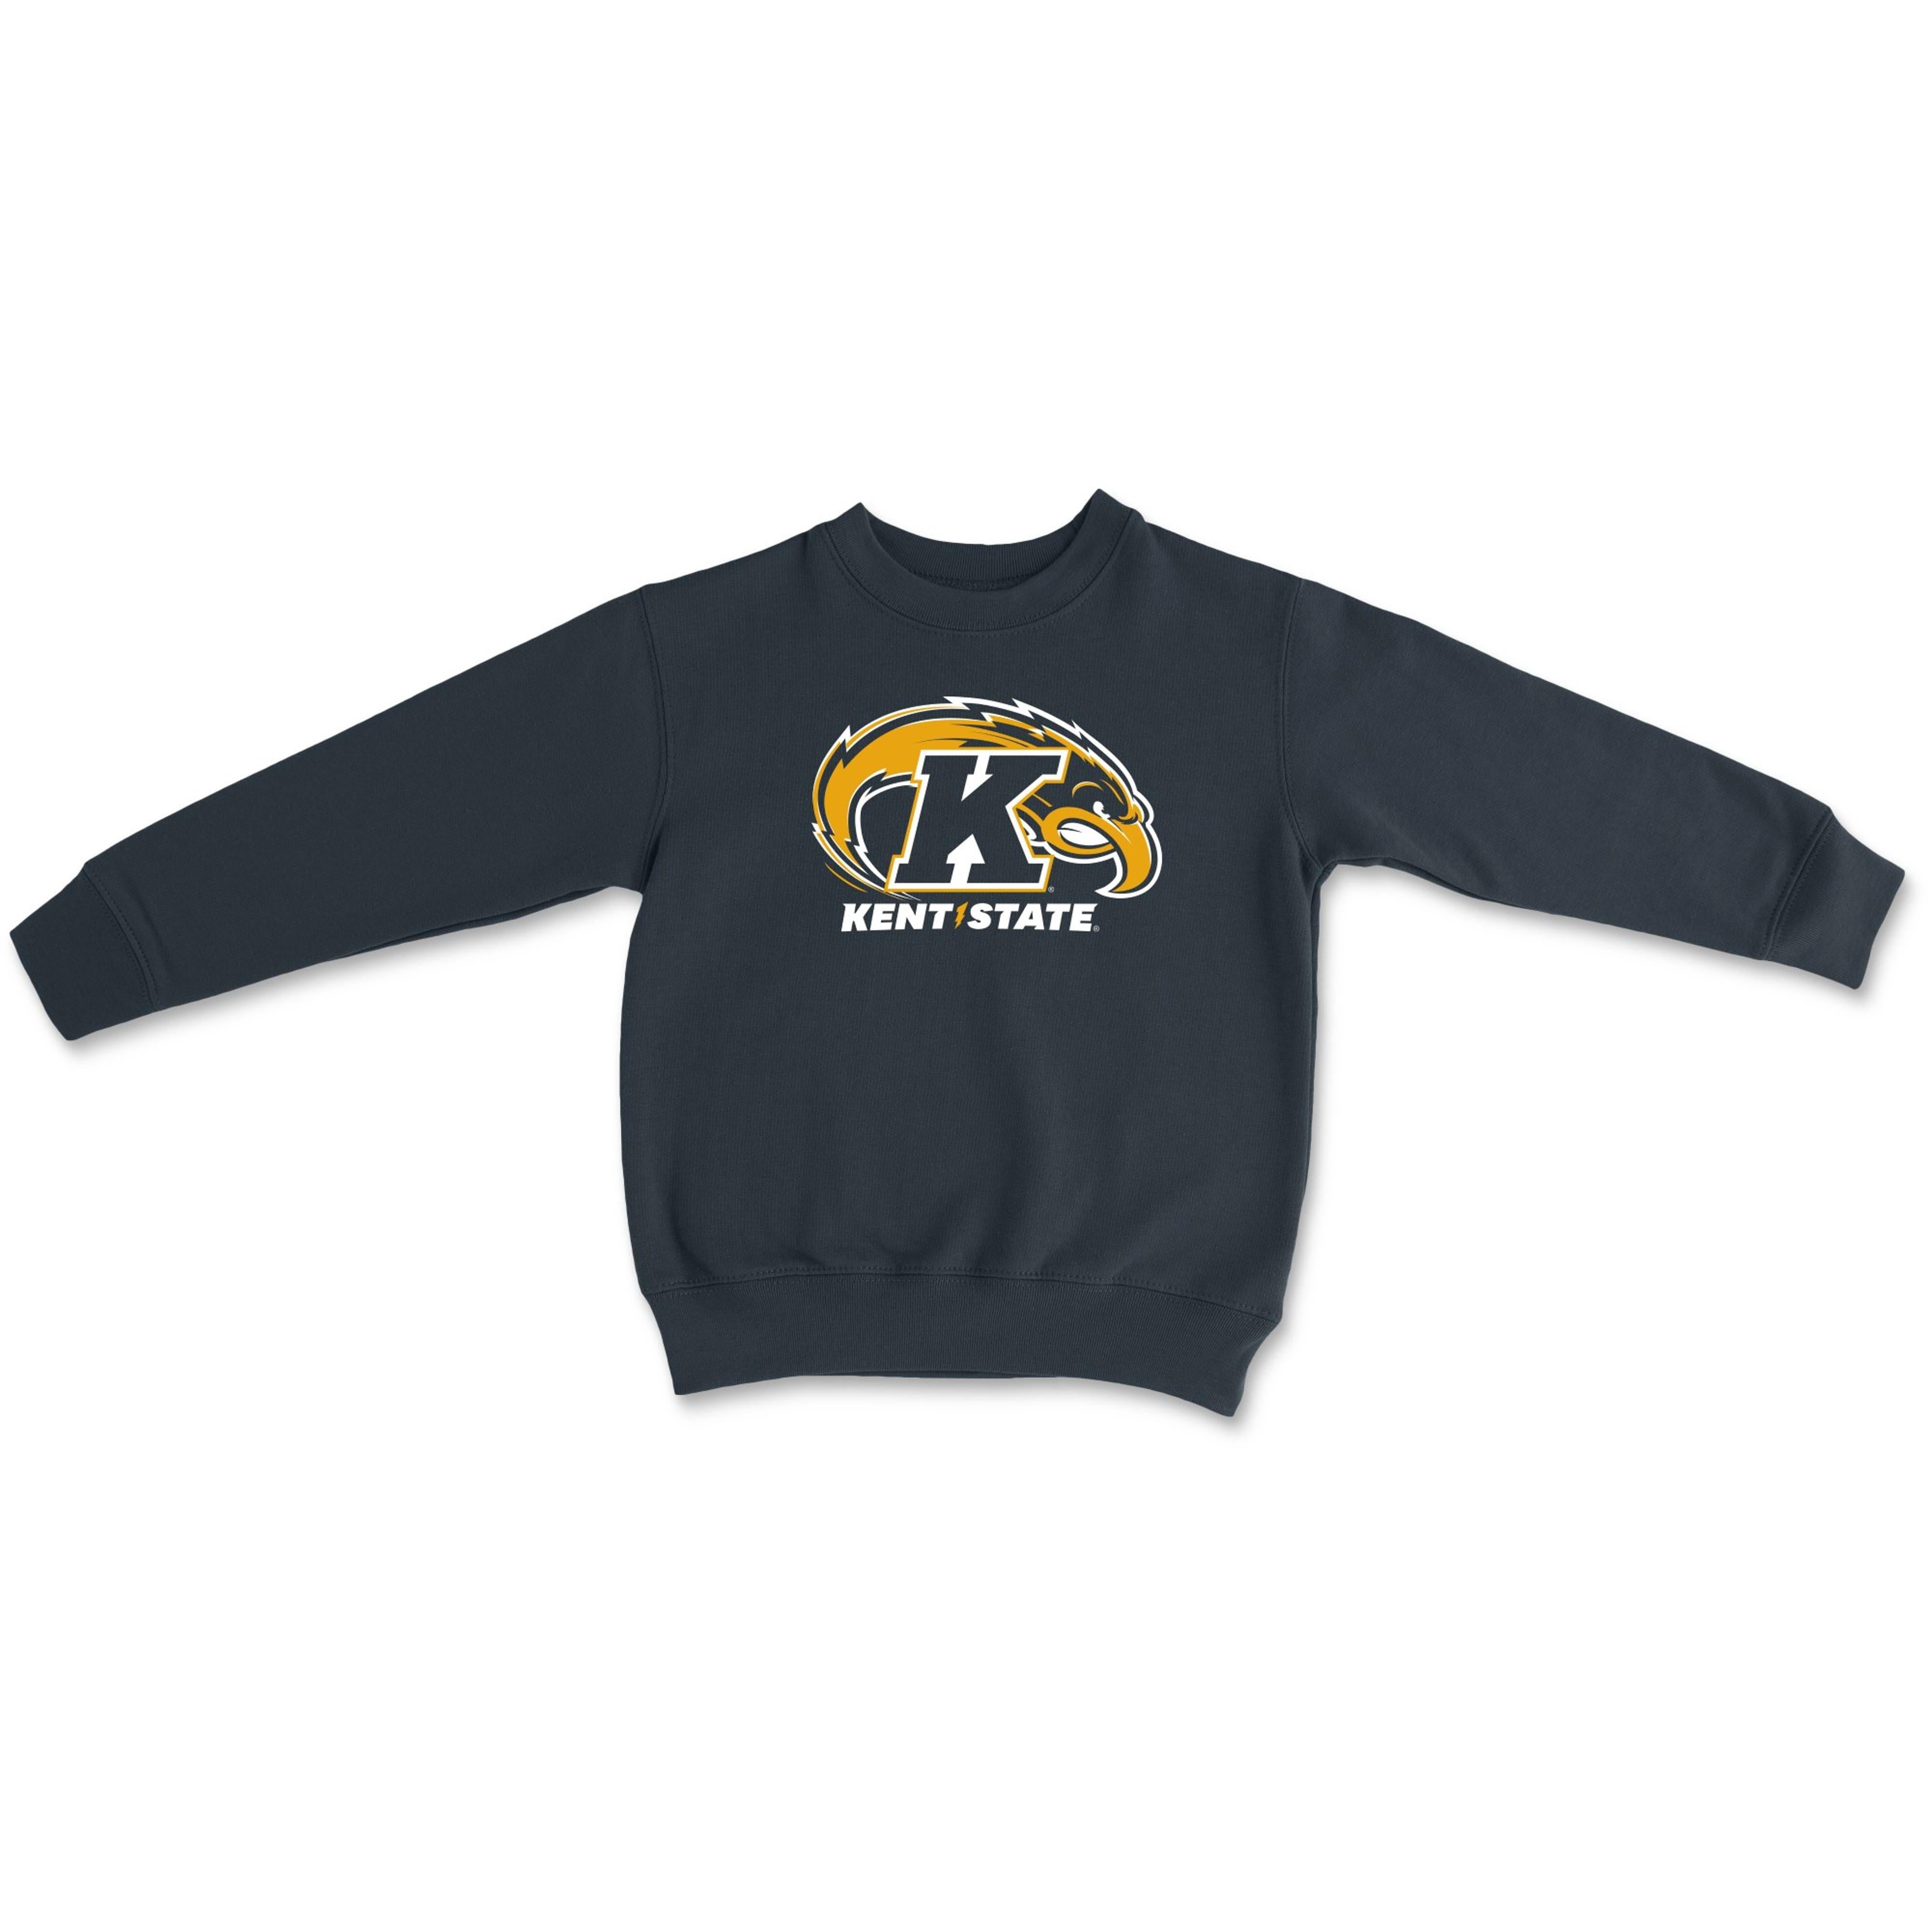 Kent State Navy Youth Crewneck Sweatshirt